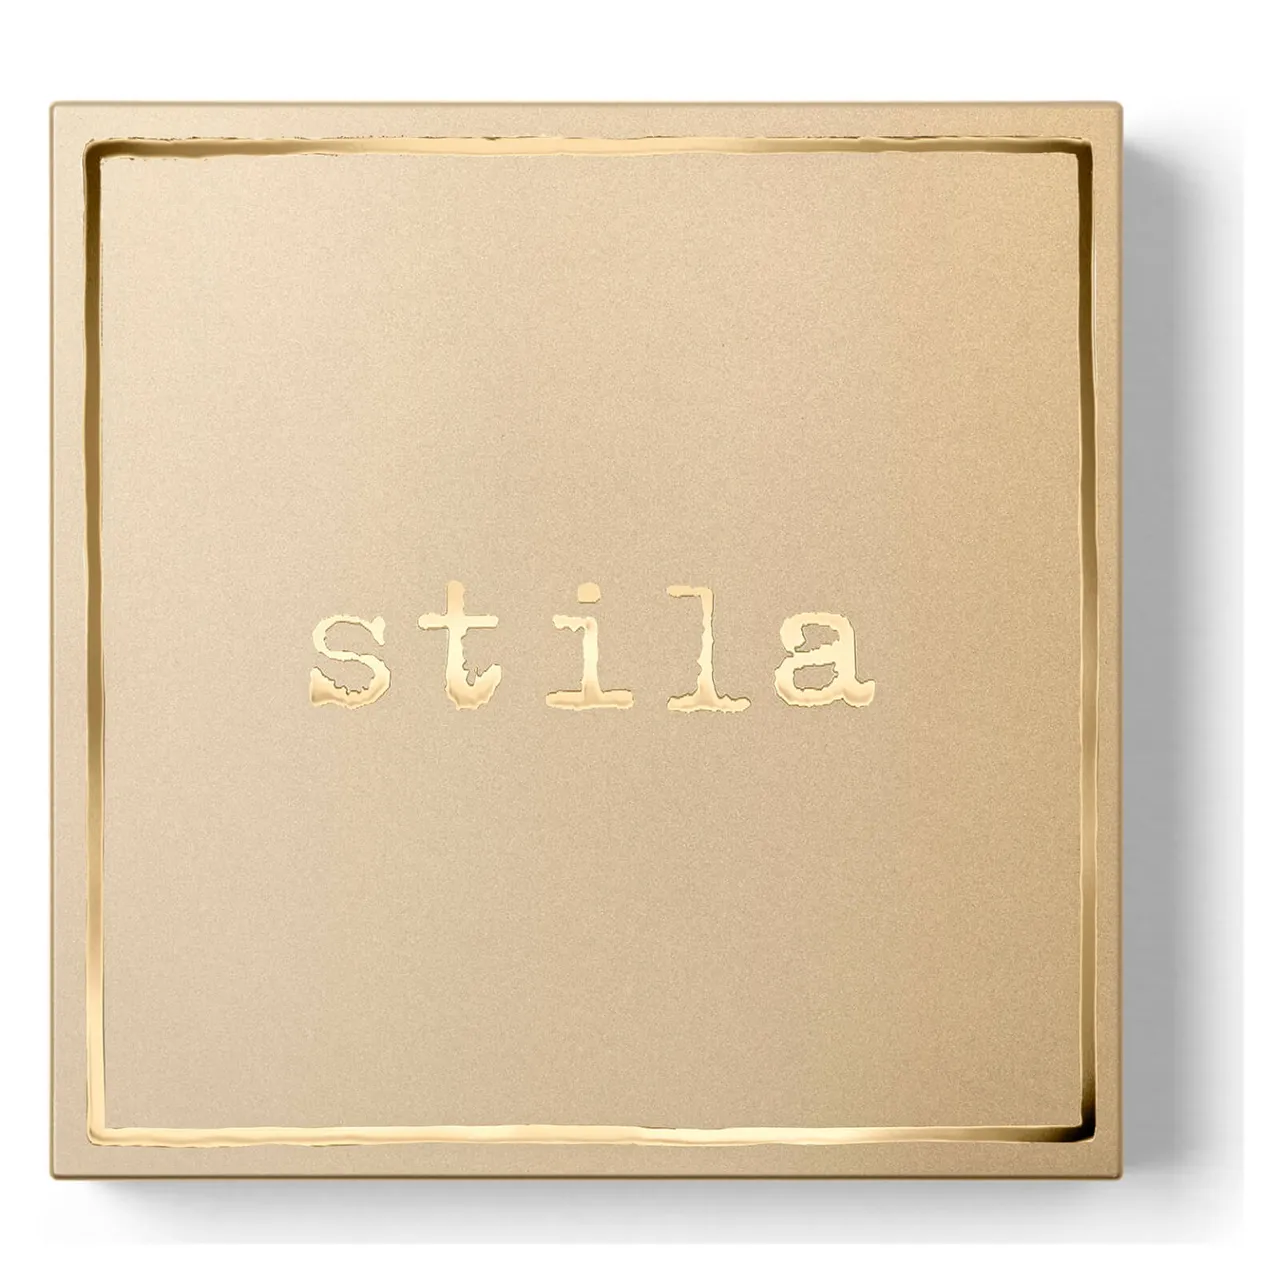 Stila Heaven's Hue Highlighter 10g (Various Shades) - Bronzed